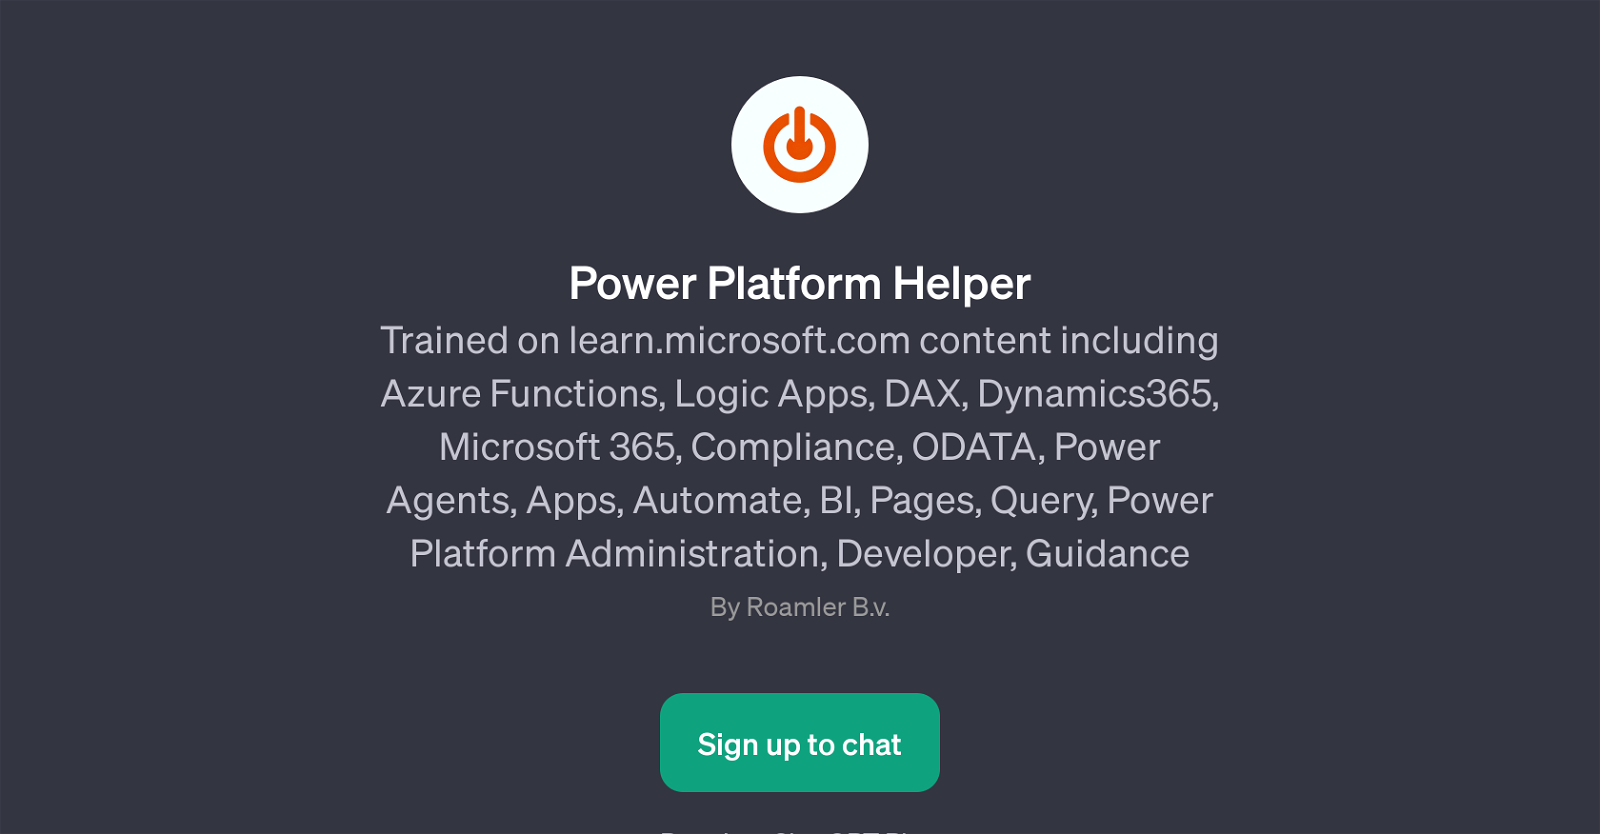 Power Platform Helper website